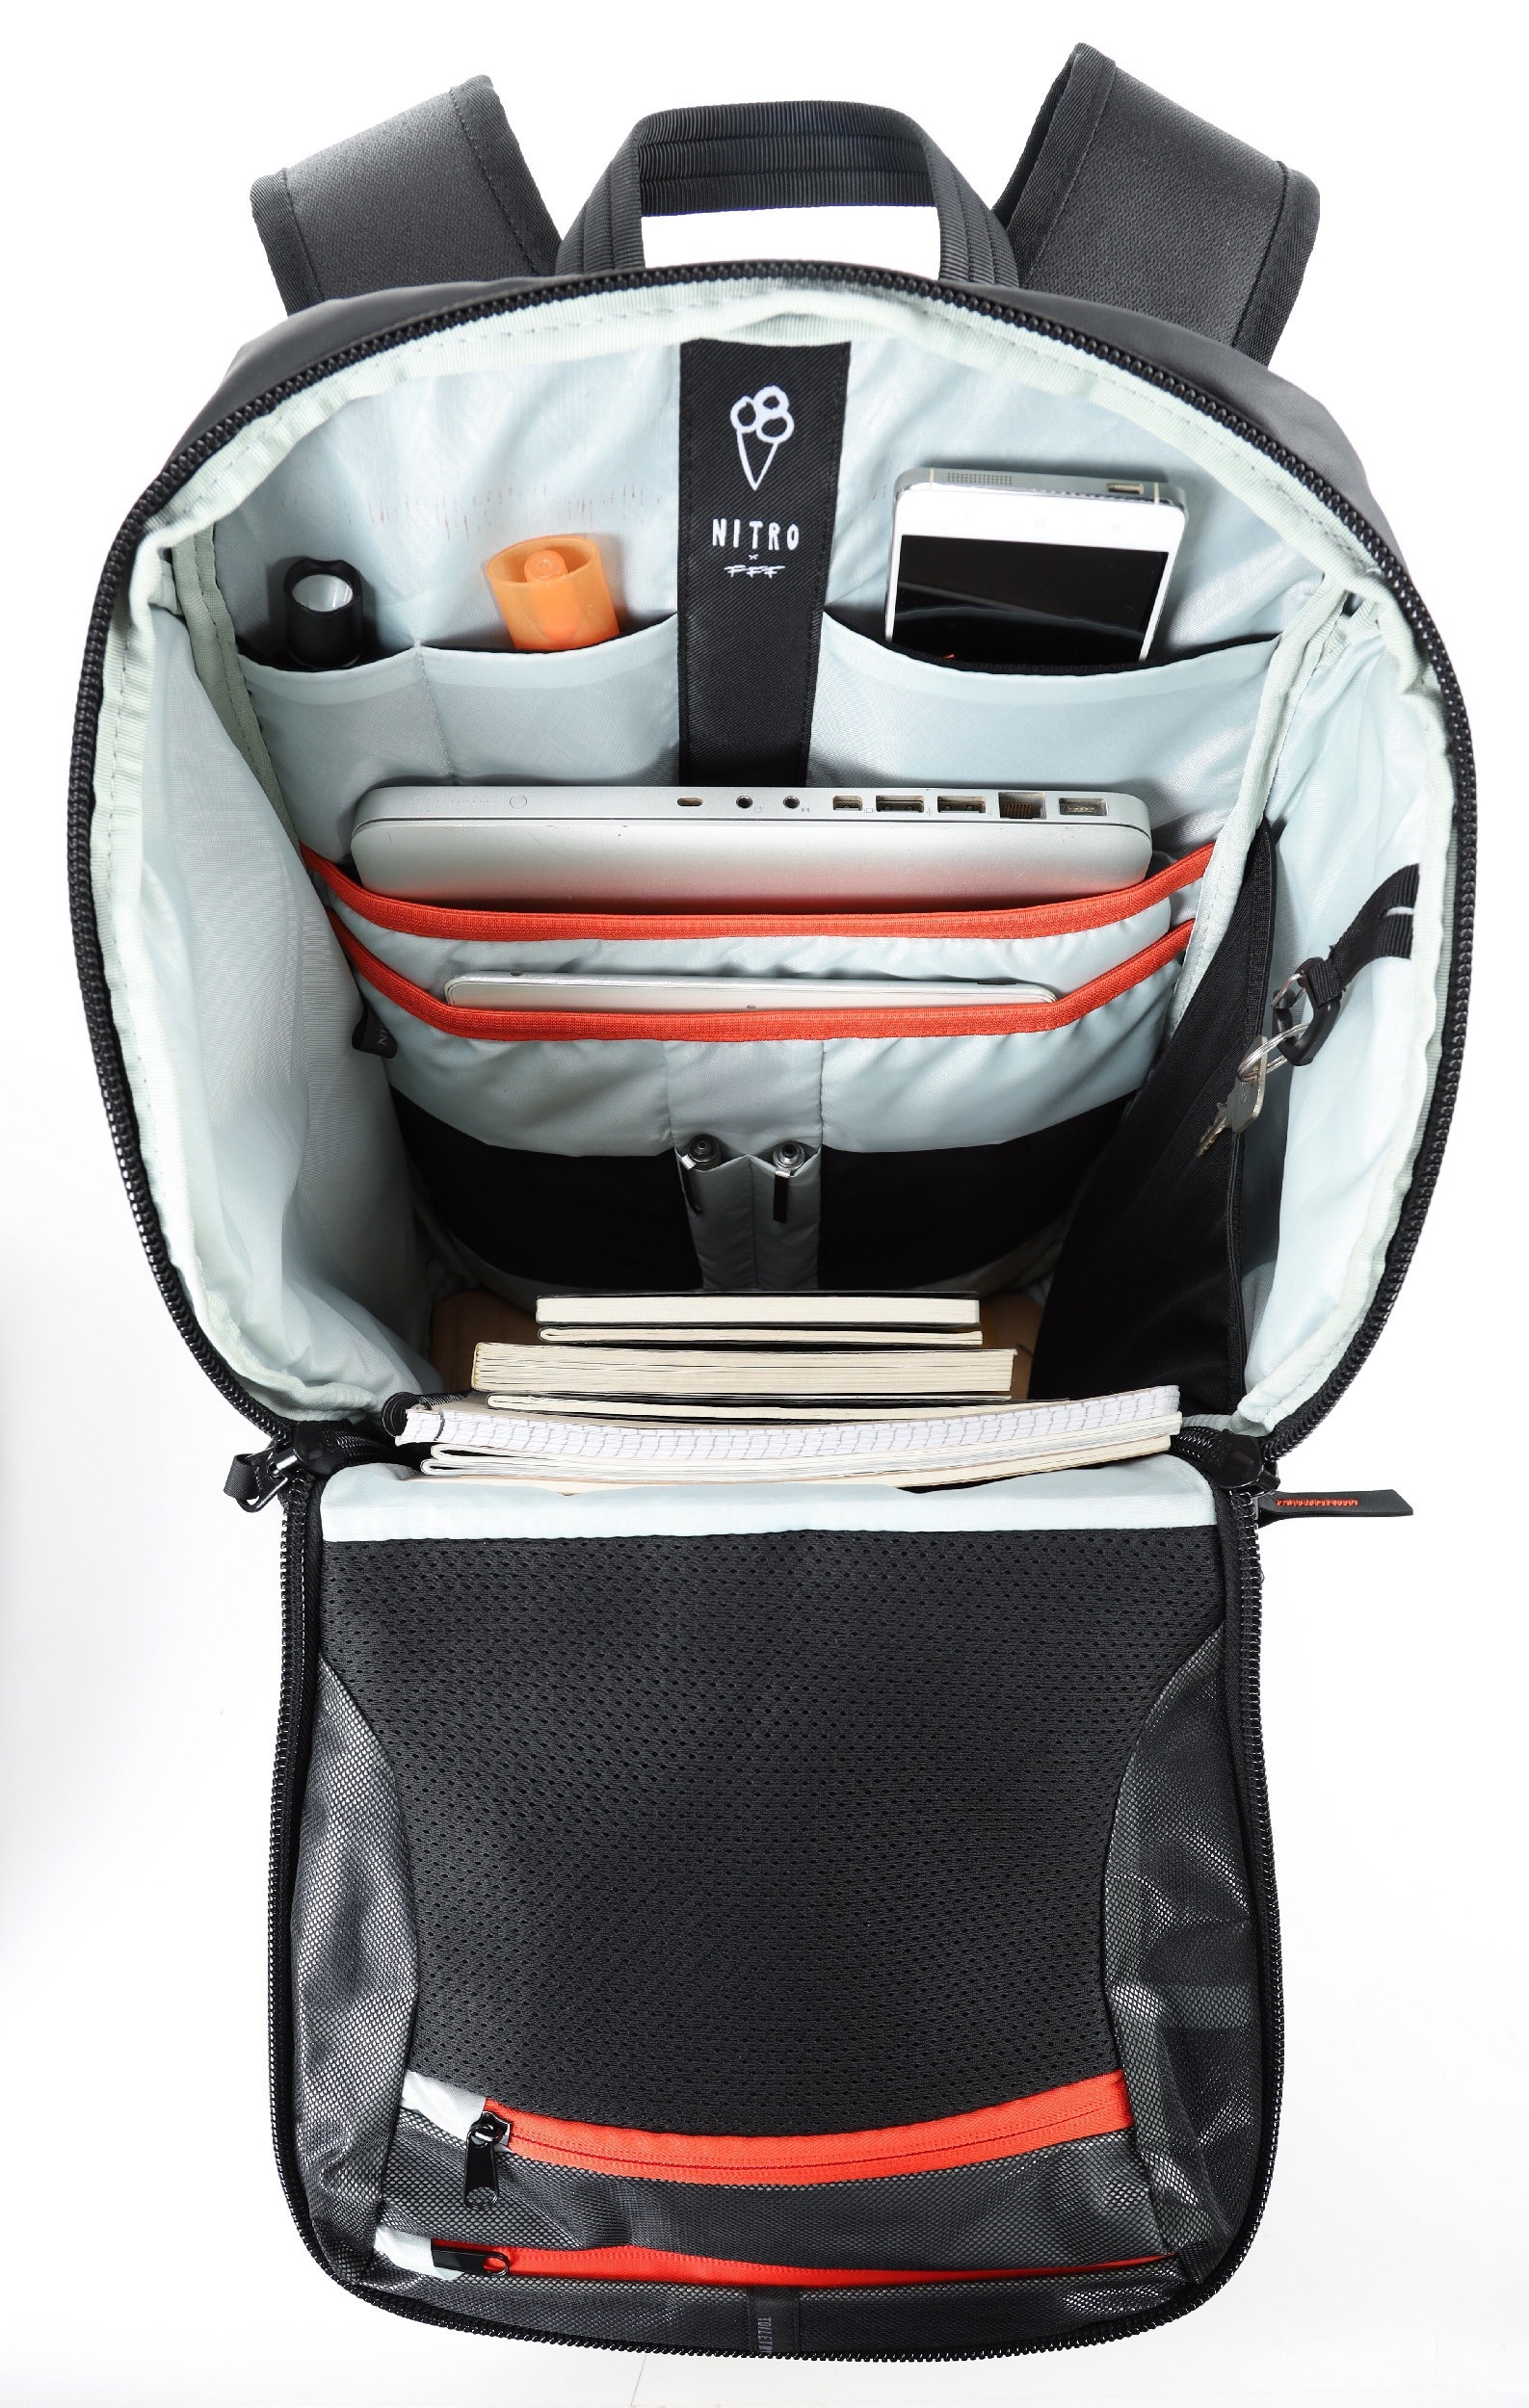 NITRO Laptoprucksack »NIKURO TRAVELER, fff black«, Reisetasche, Travel Bag, Alltagsrucksack, Daypack